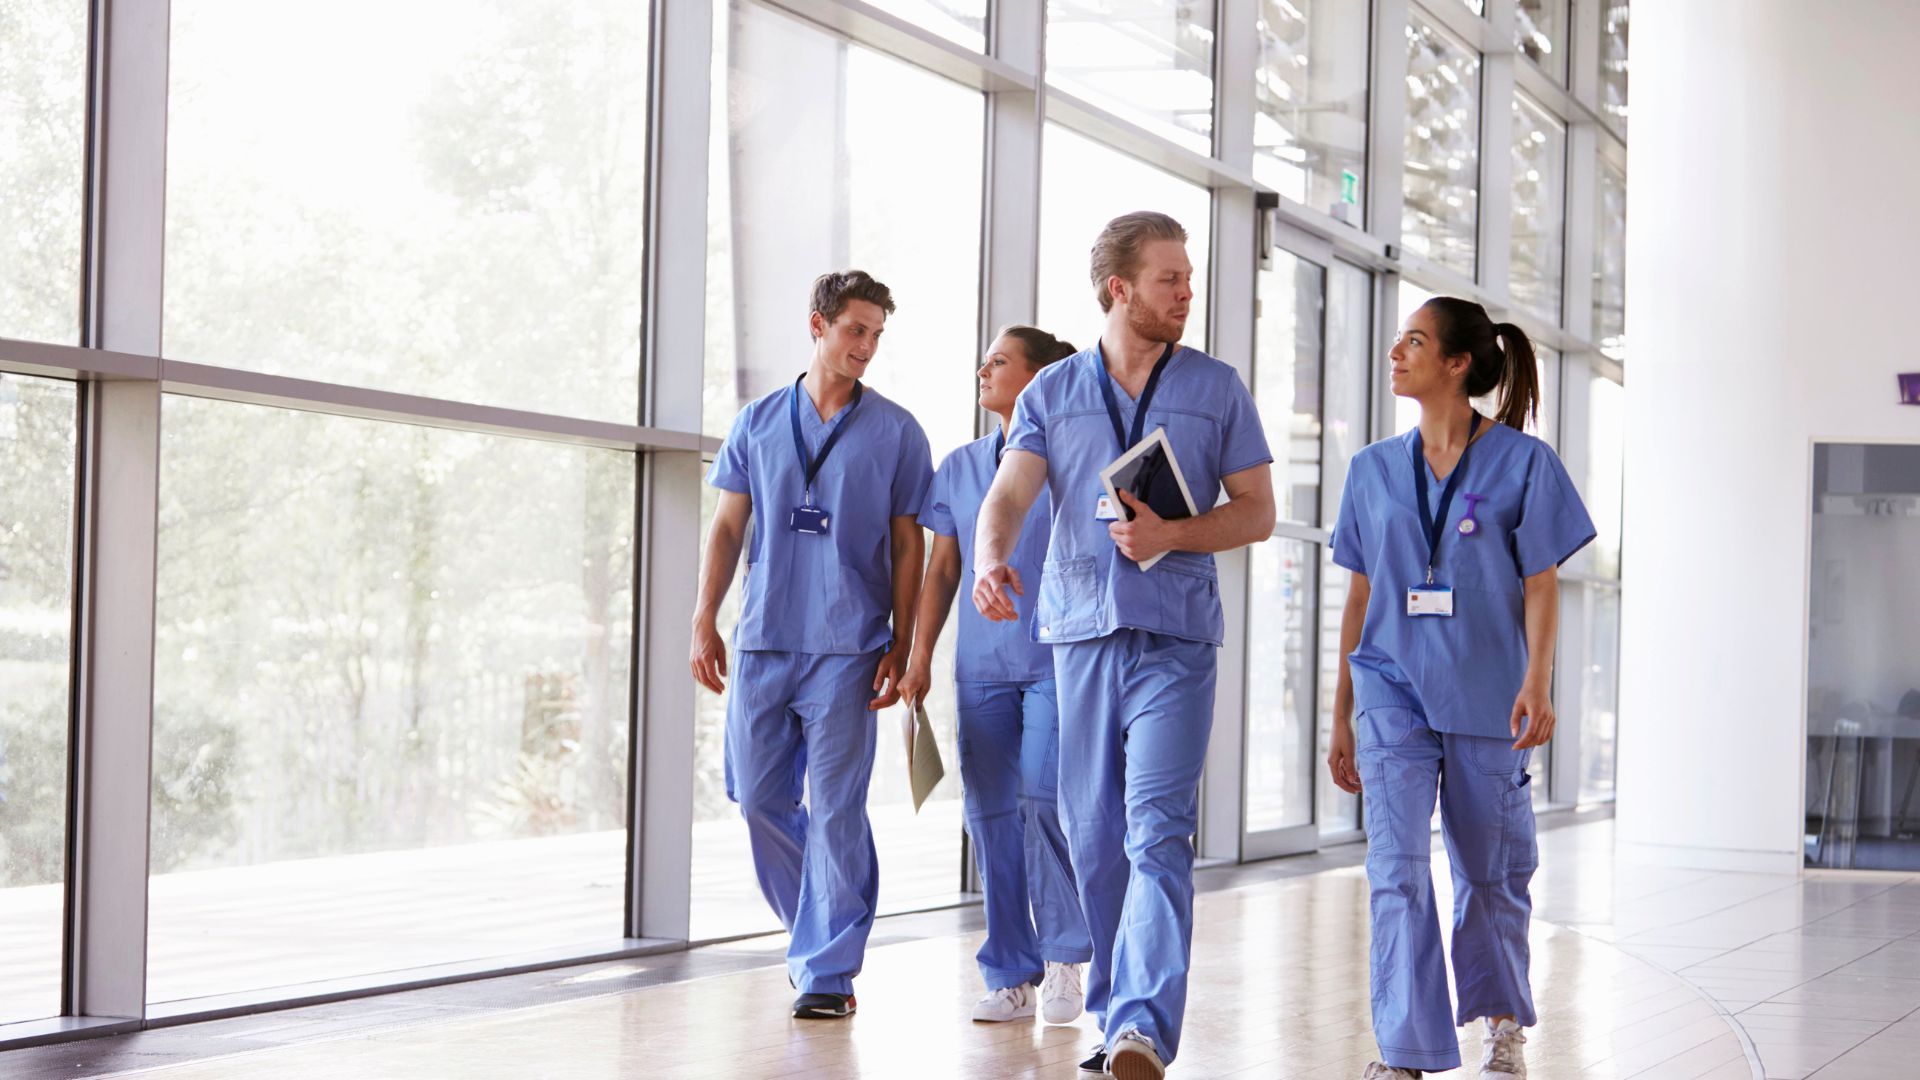 nurses walking in hallway in hospital